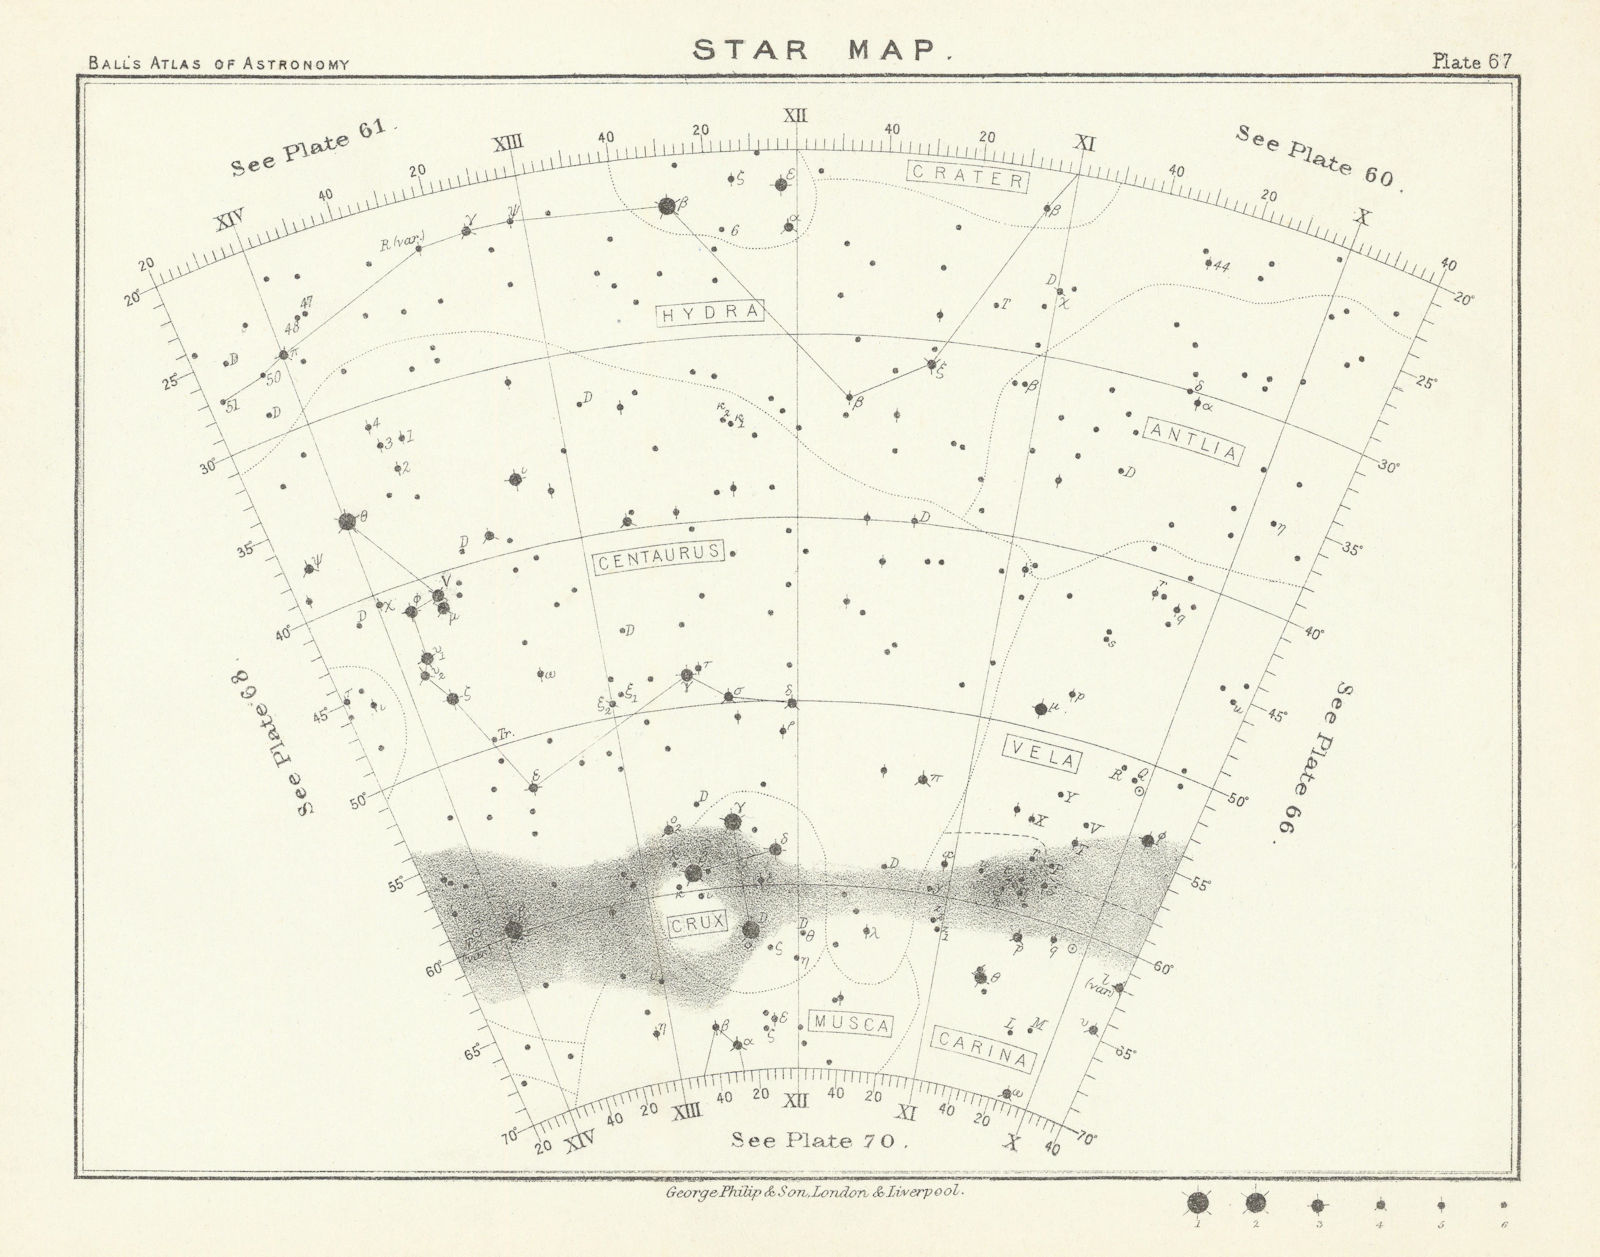 Star map night sky Antlia Carina Crater Crux Hydra Musca Vela 1892 old